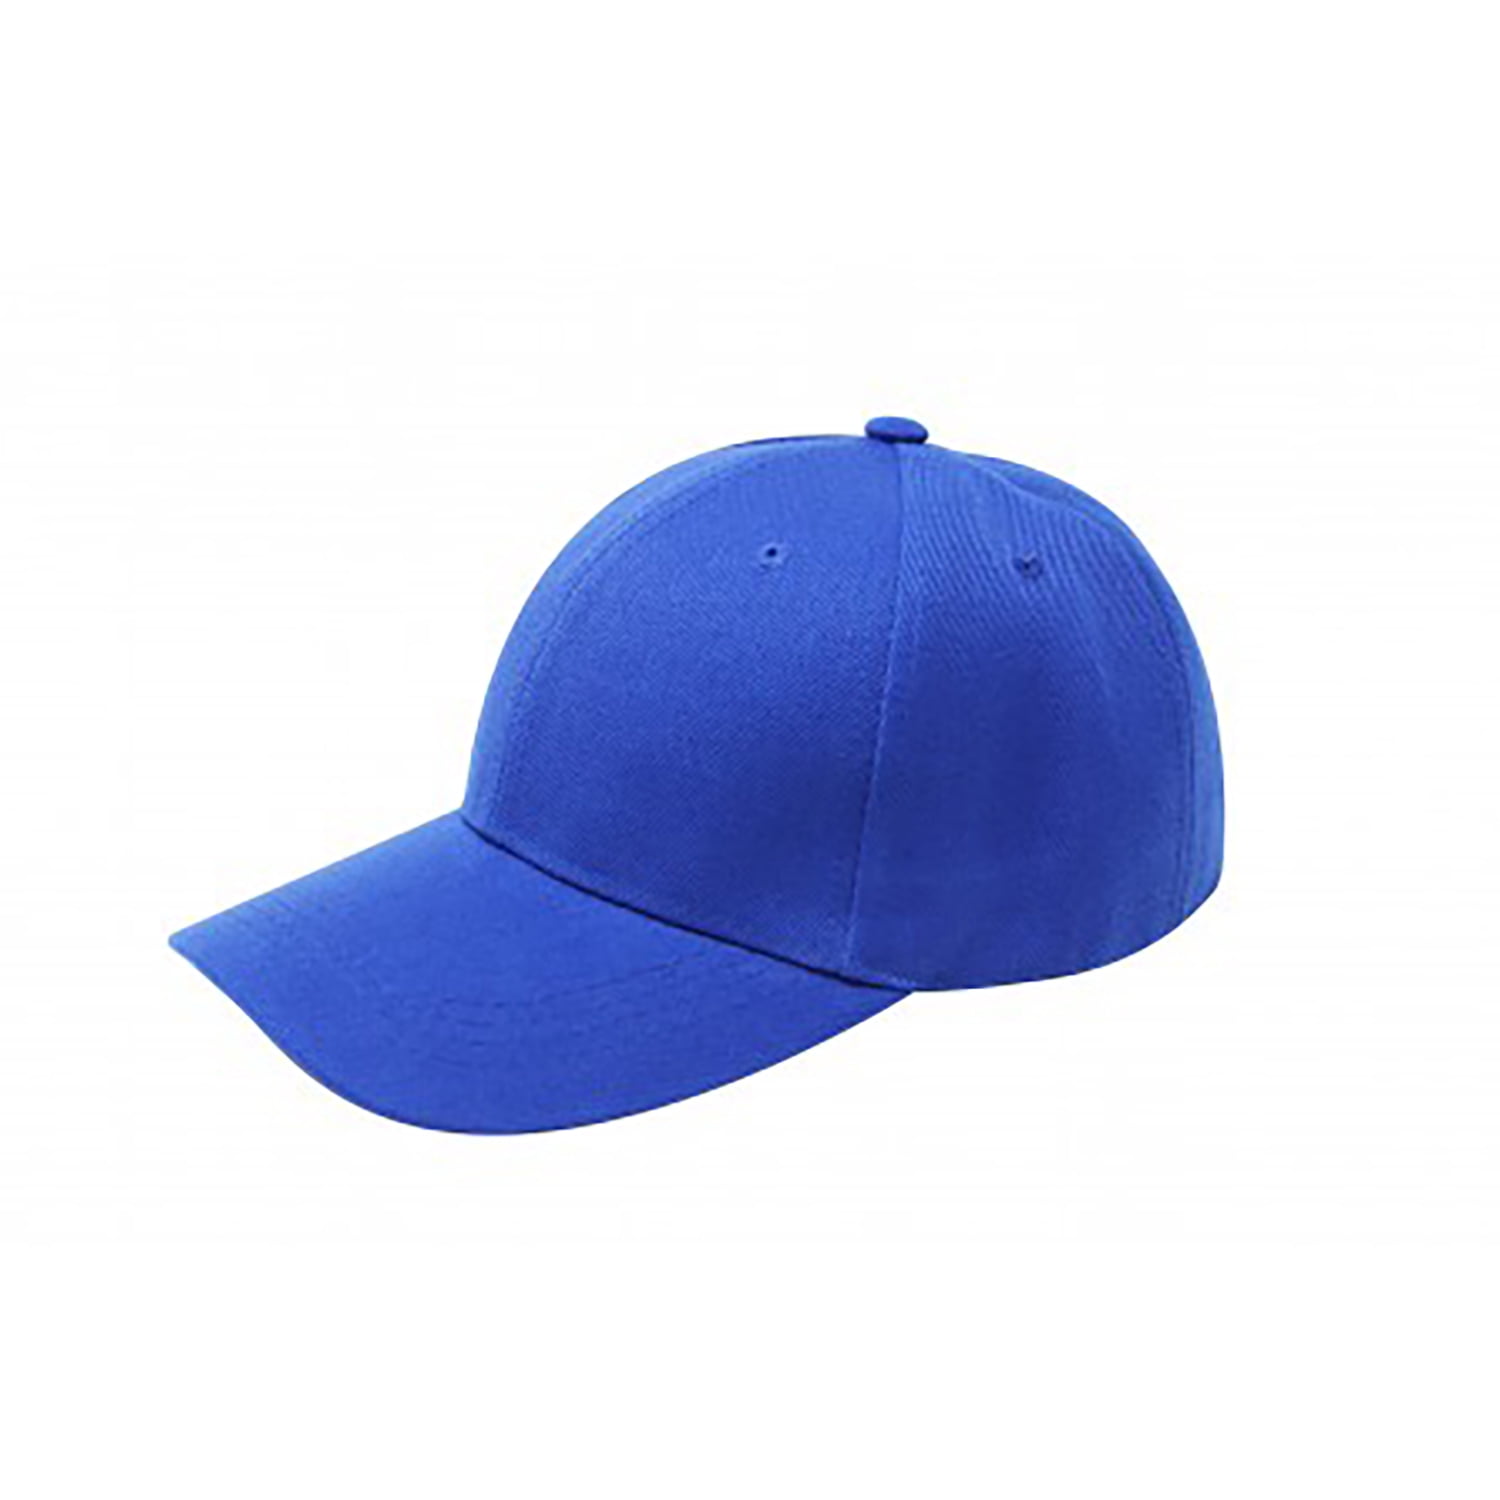 Buy Royal Blue Plain Baseball Cap Mens Womens Adjustable Online in India 